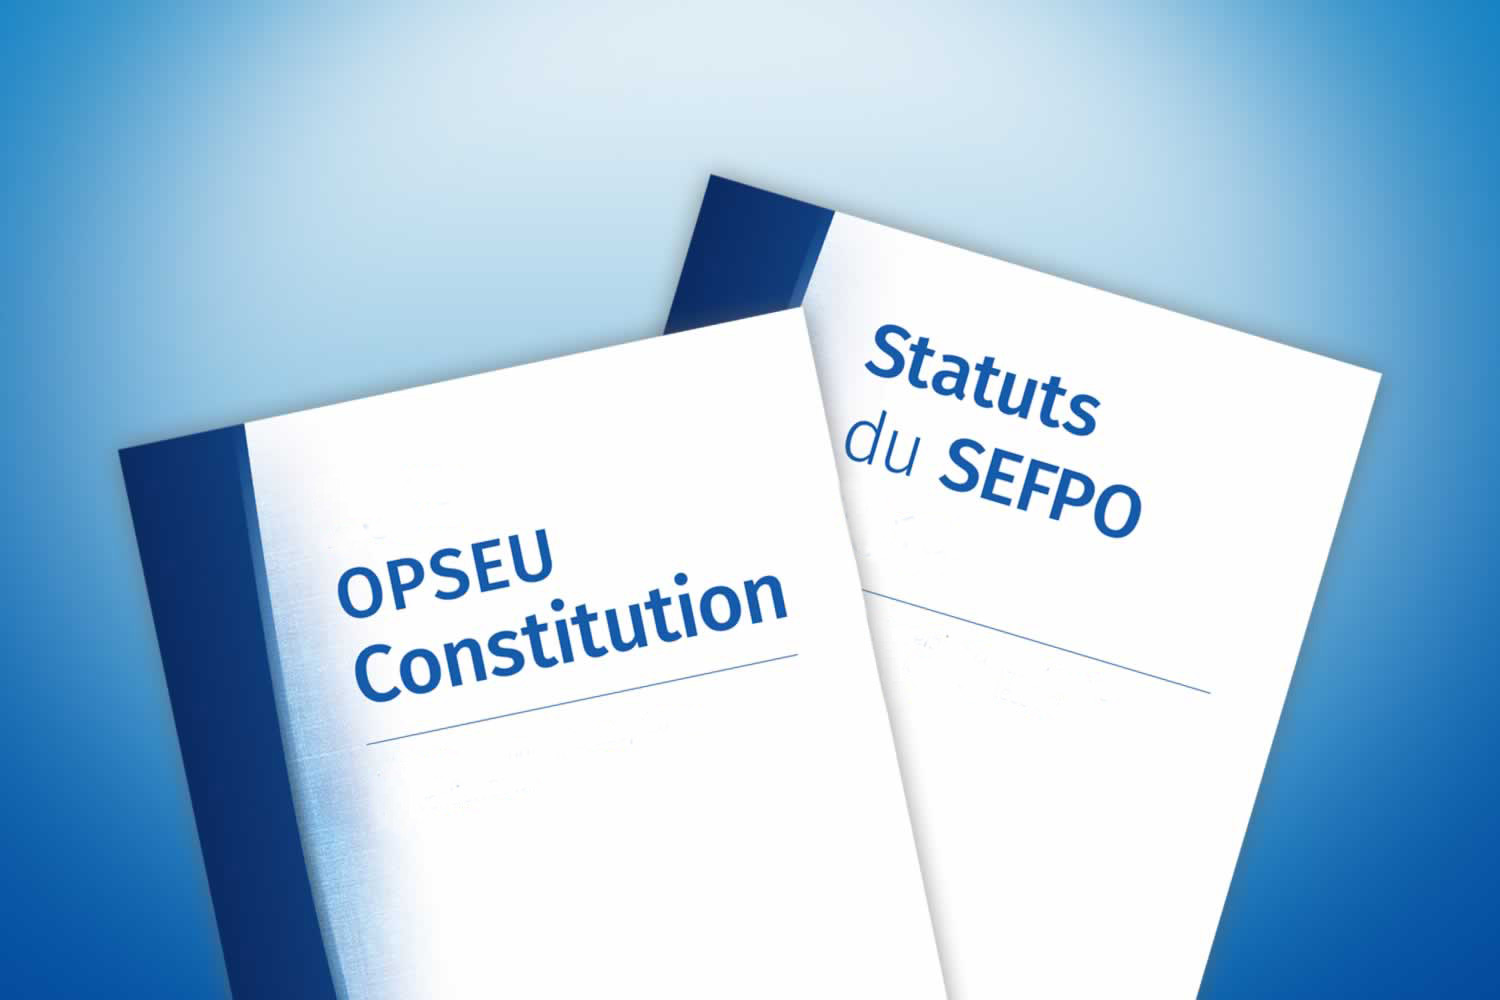 OPSEU Constitution - SEFPO Statuts du SEFPO